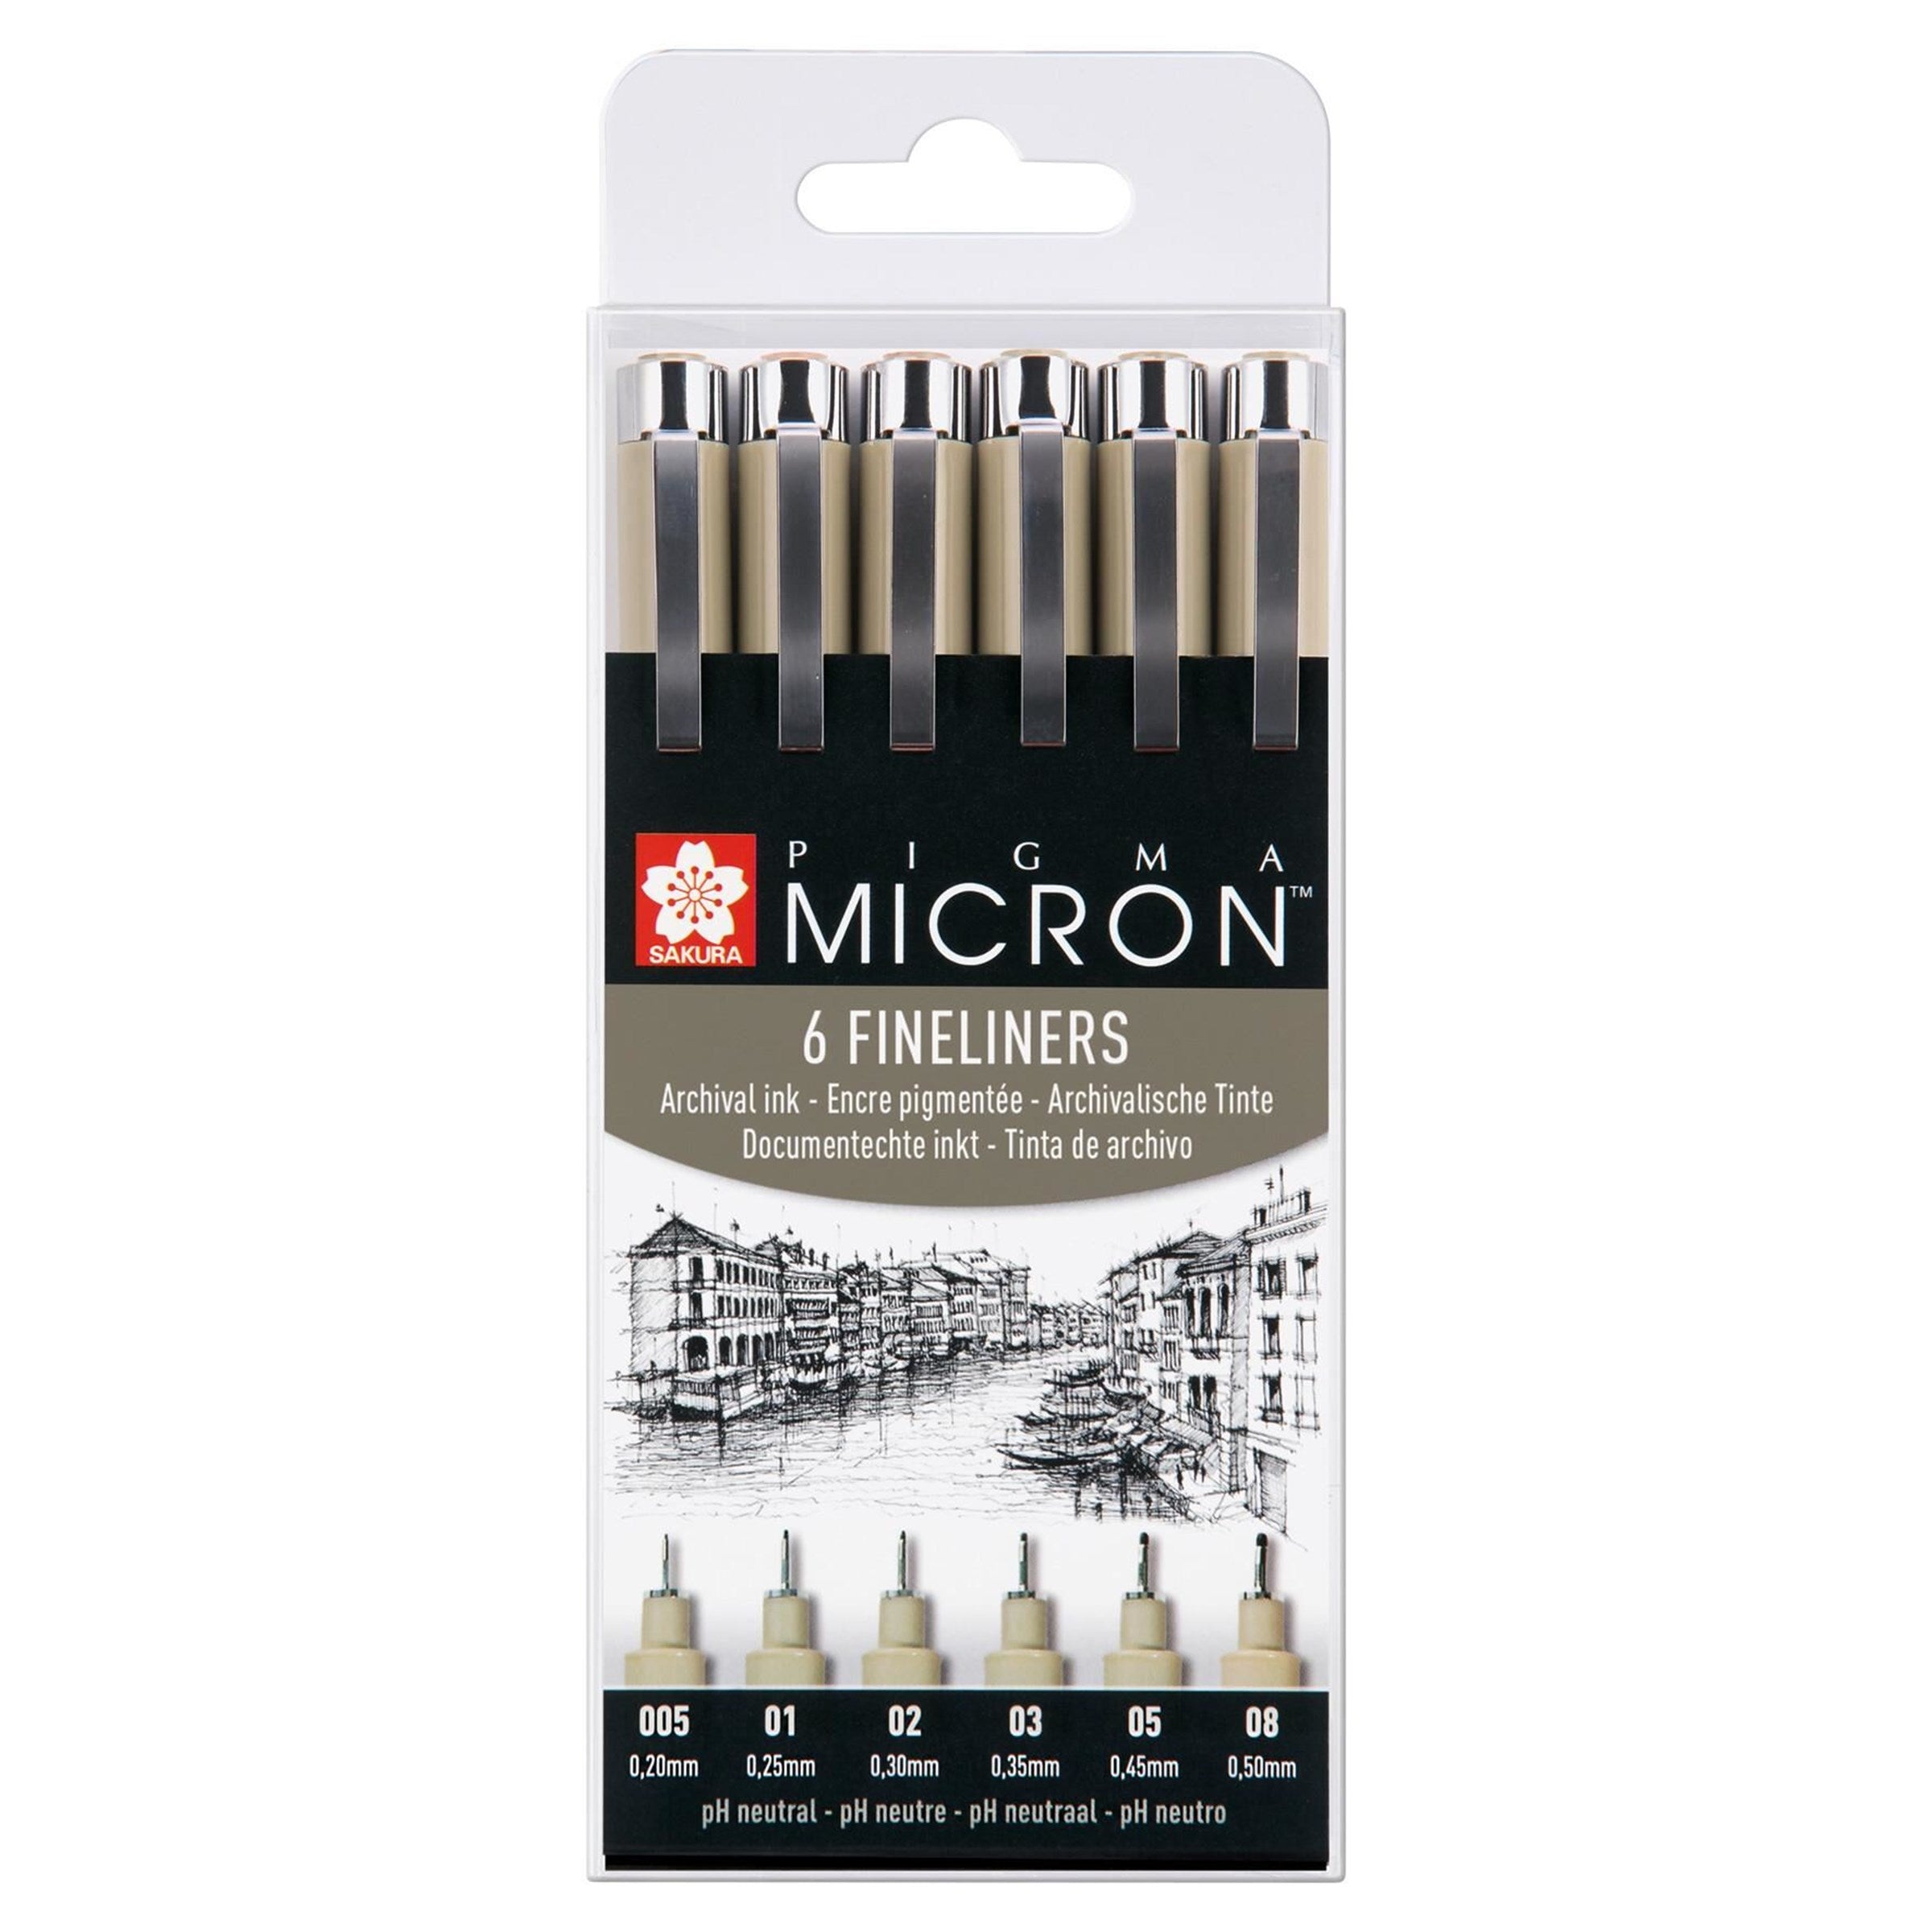 Pigma Micron fineliner set | 6 sizes, black